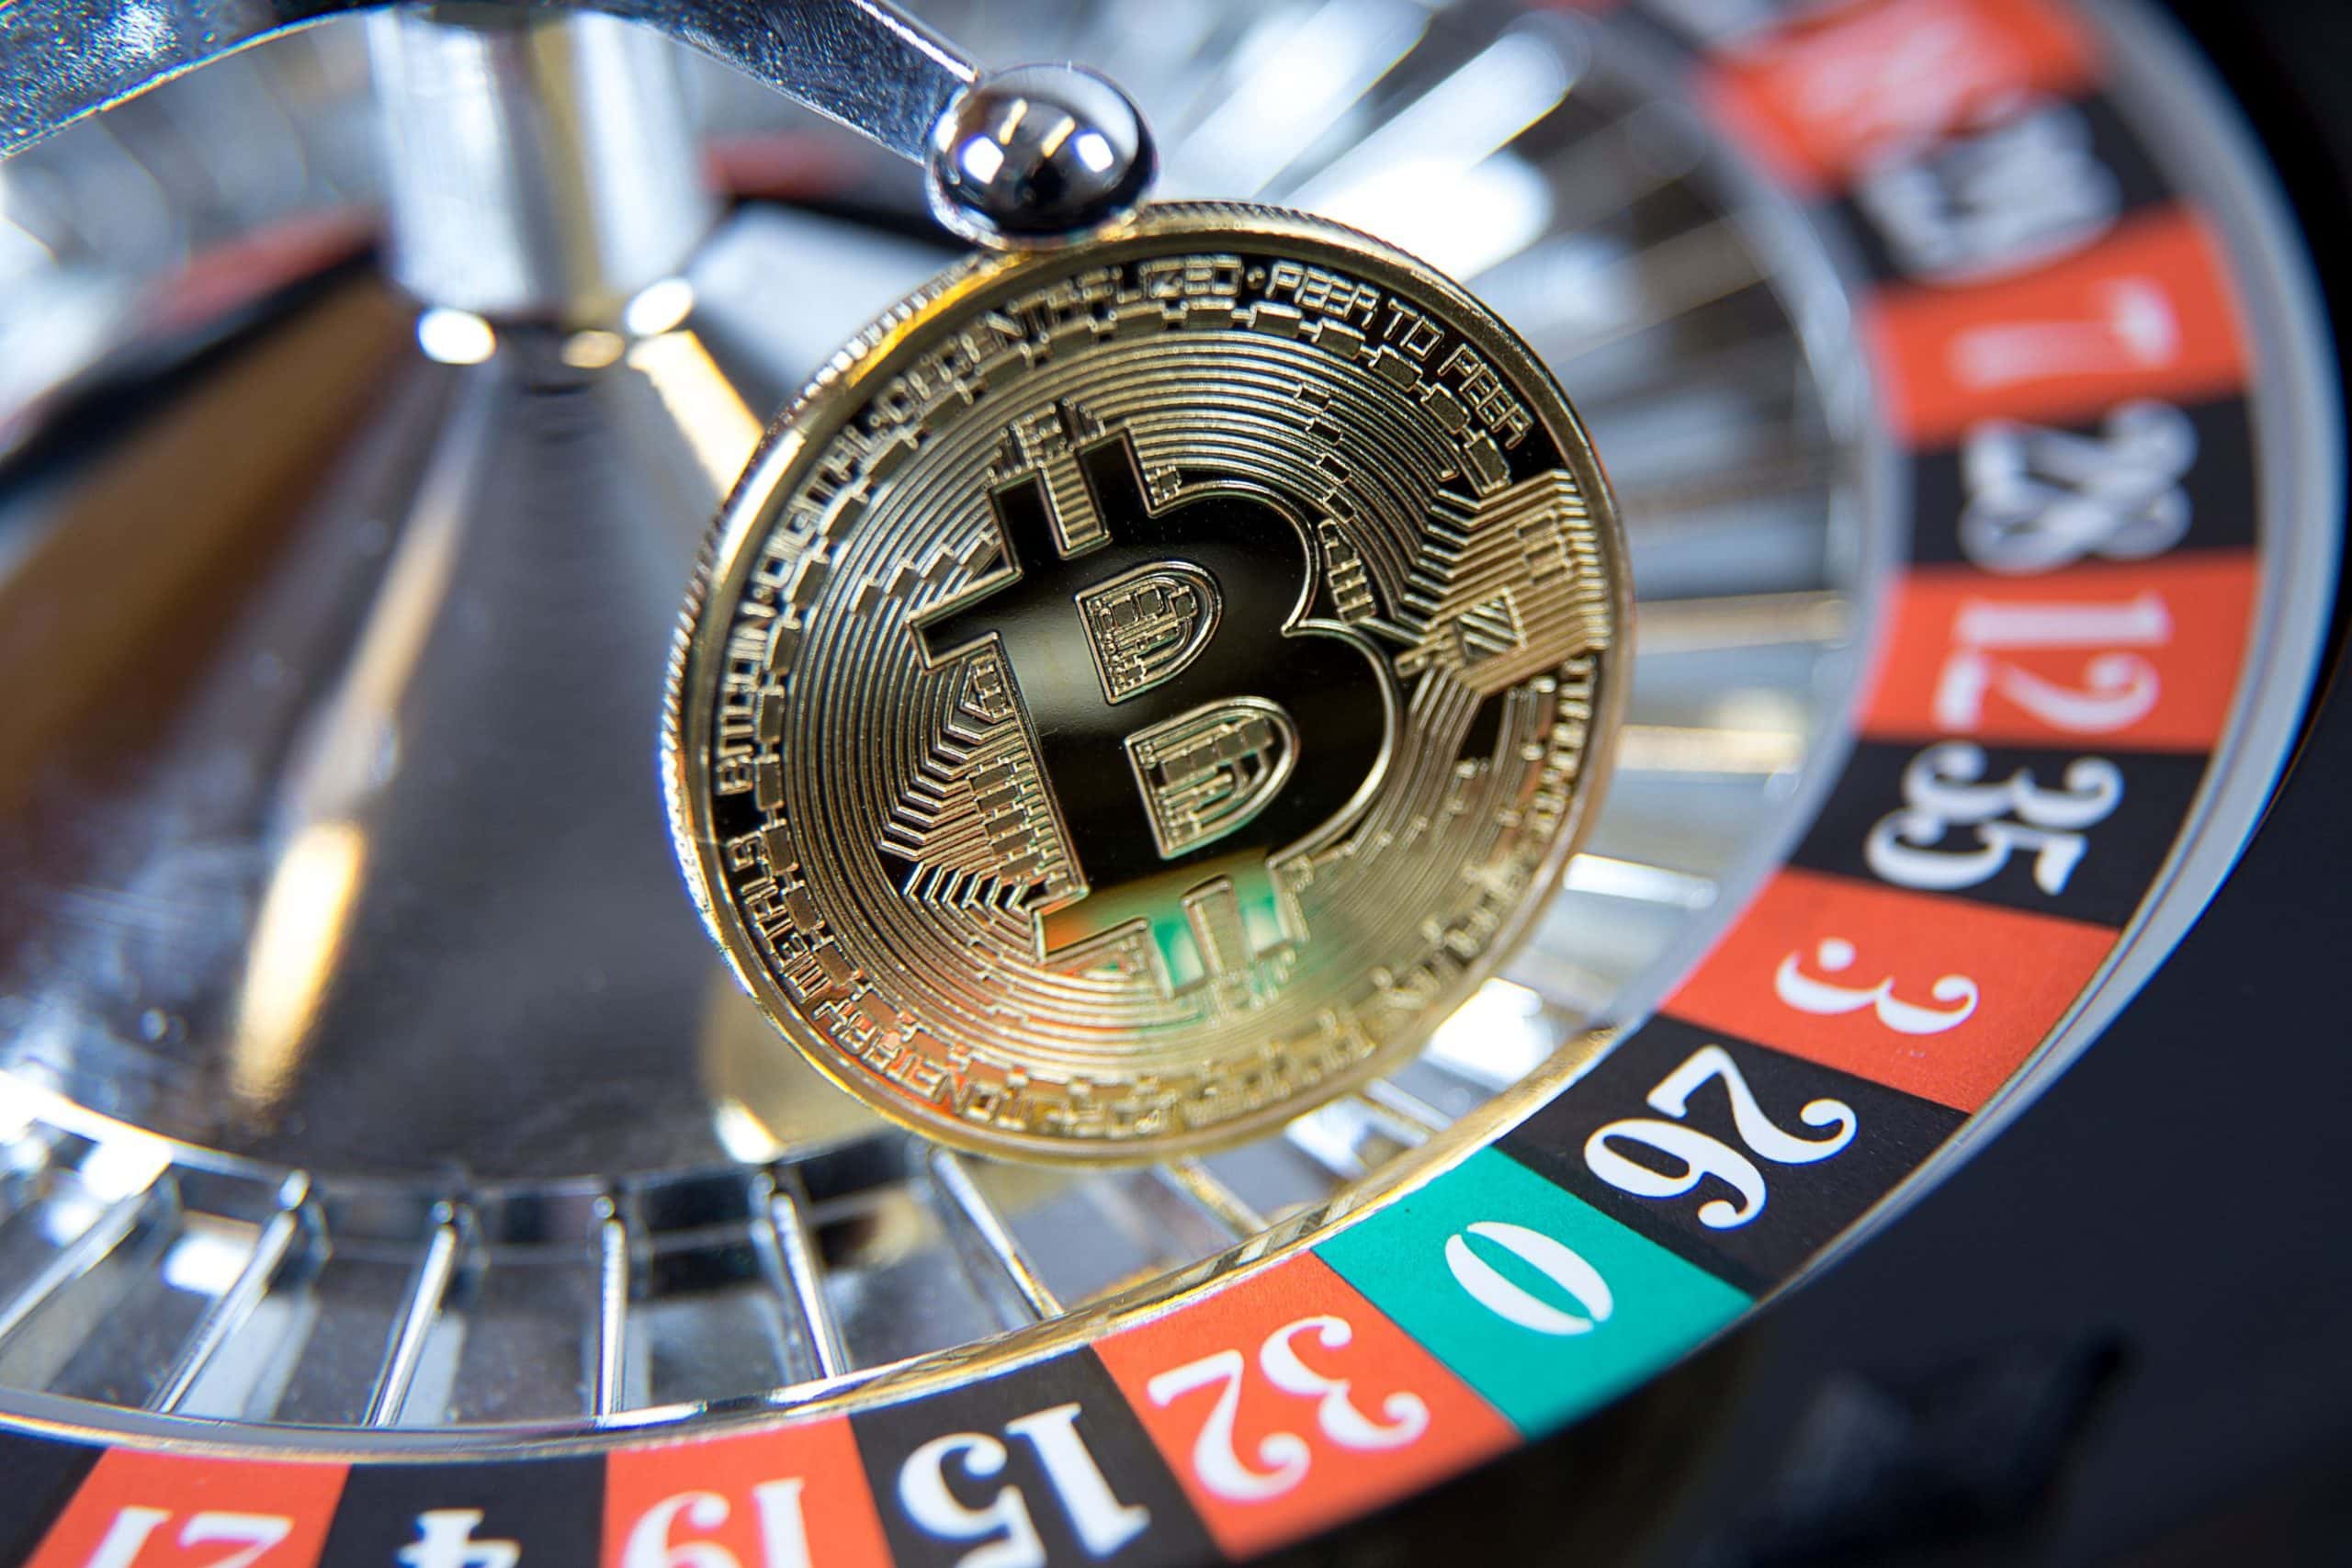 The future of Bitcoin casinos